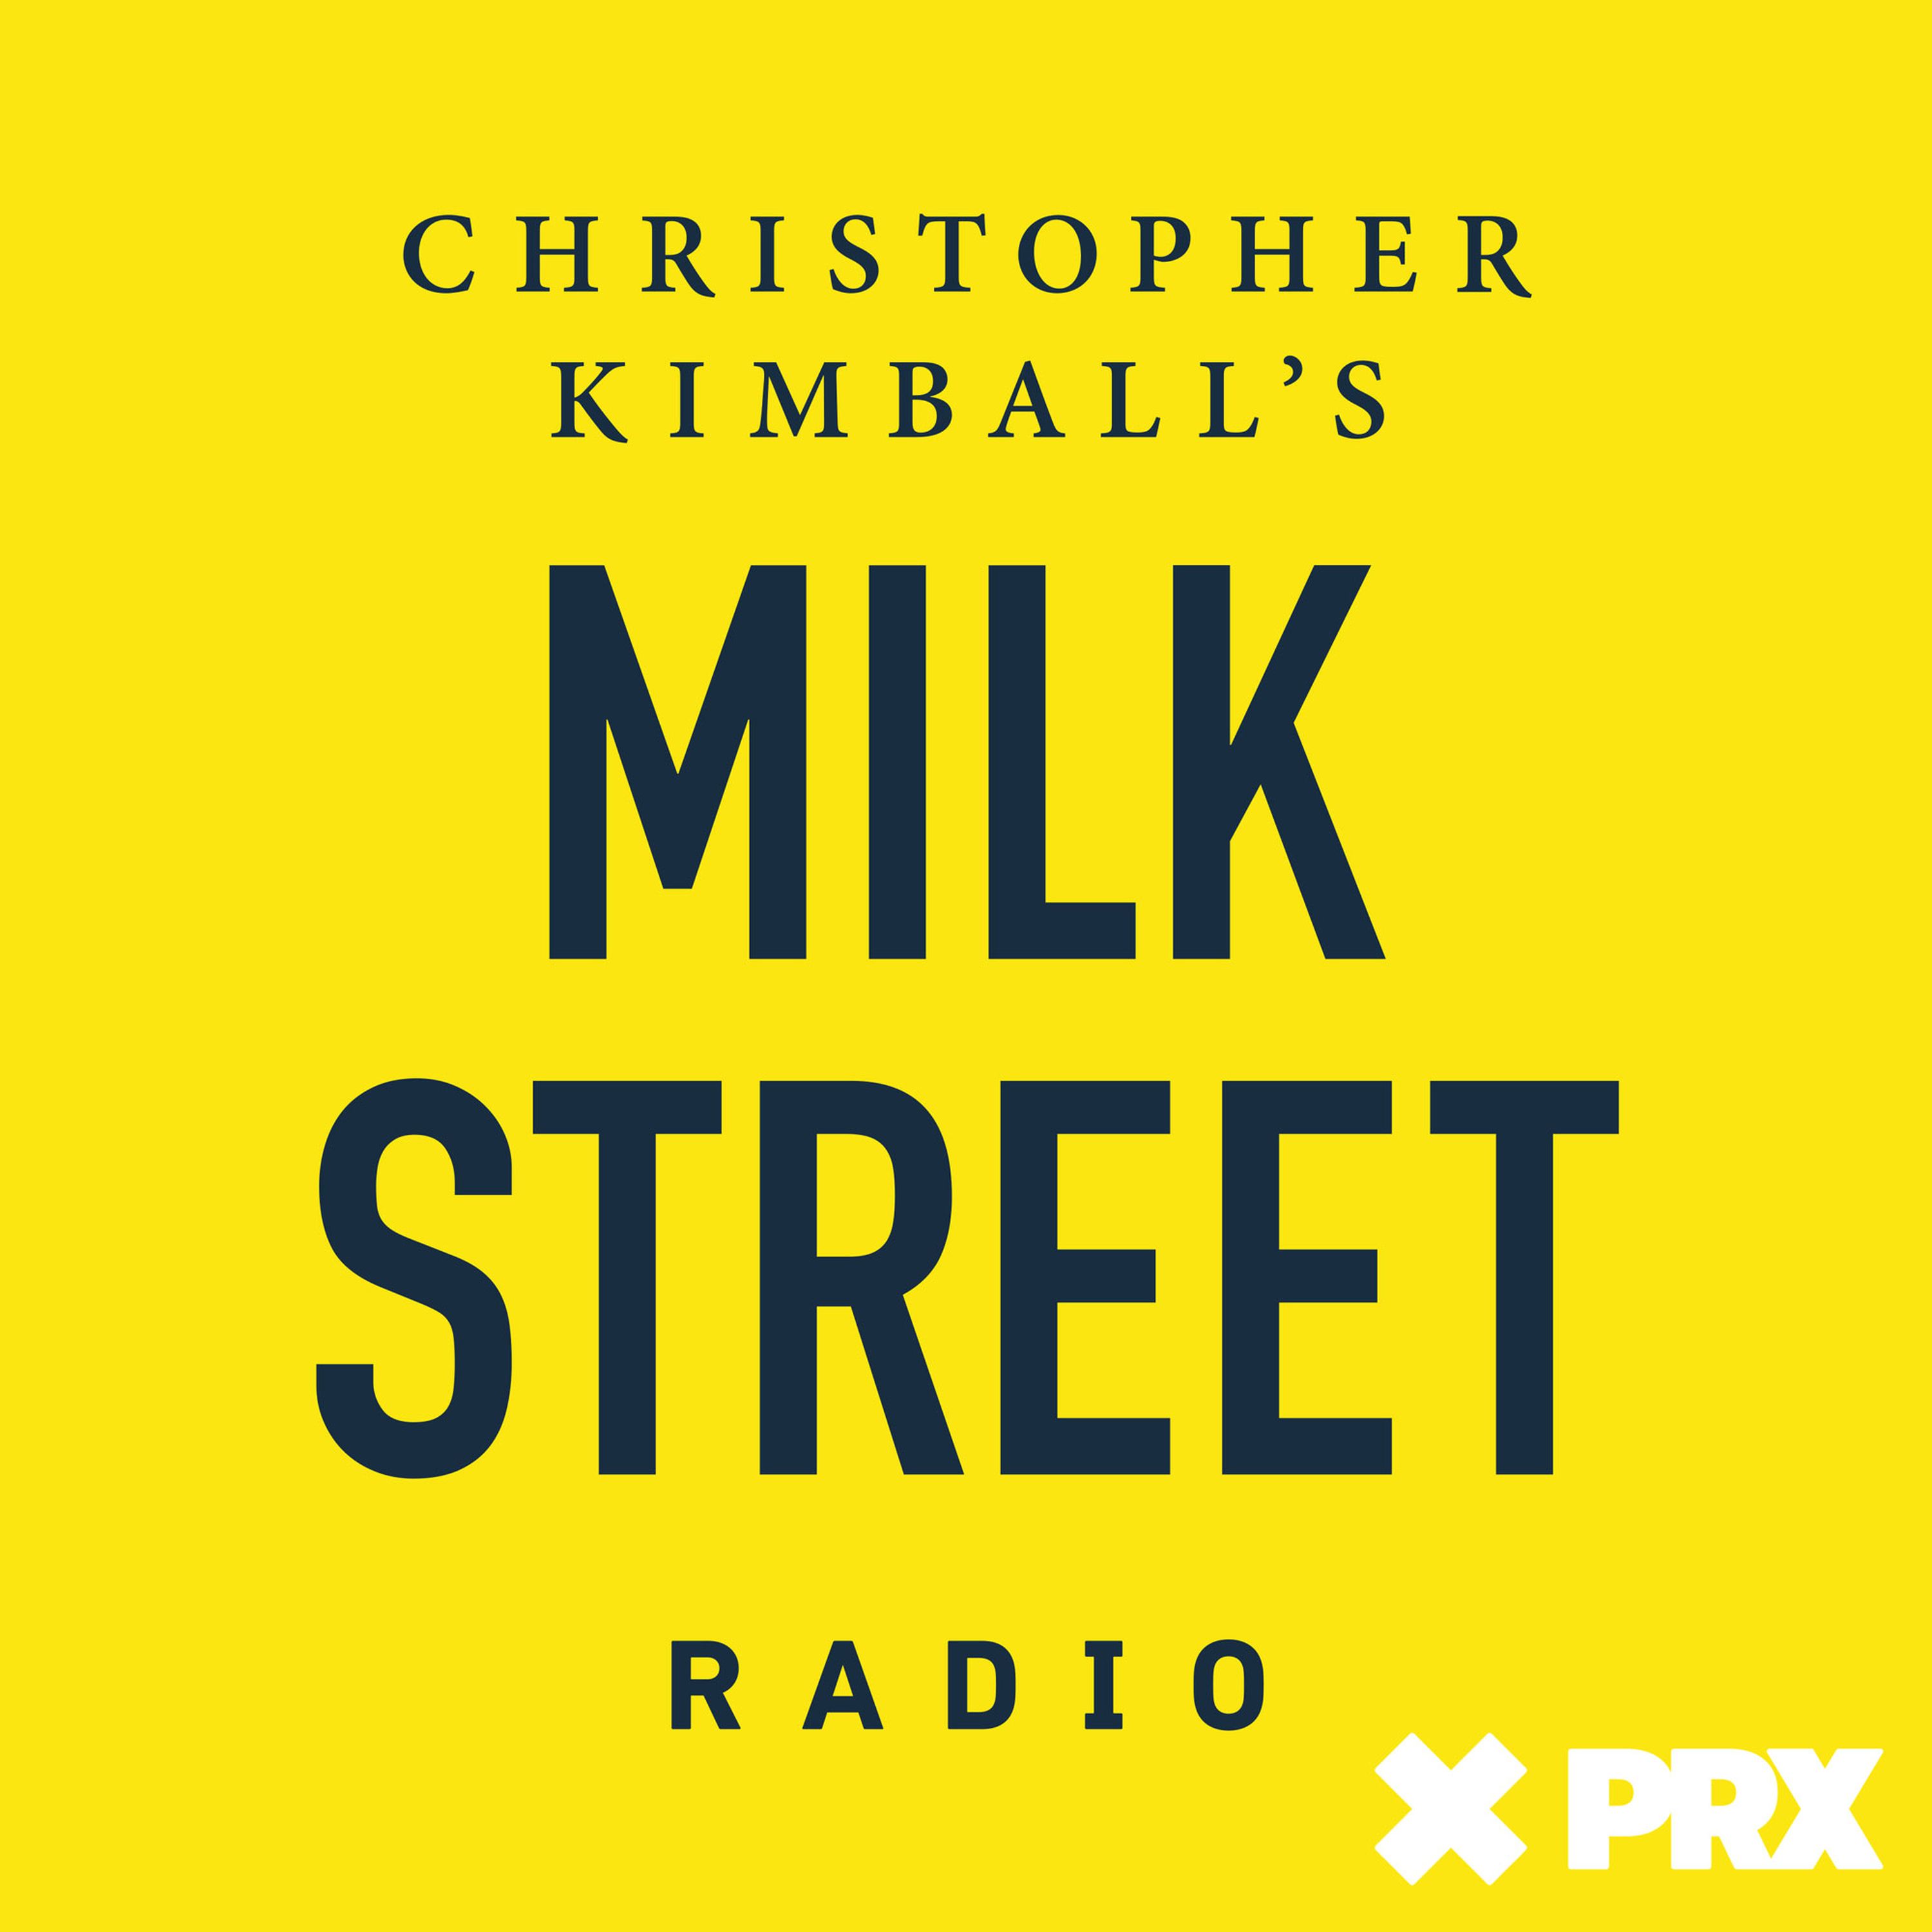 Introducing Christopher Kimball’s Milk Street Radio